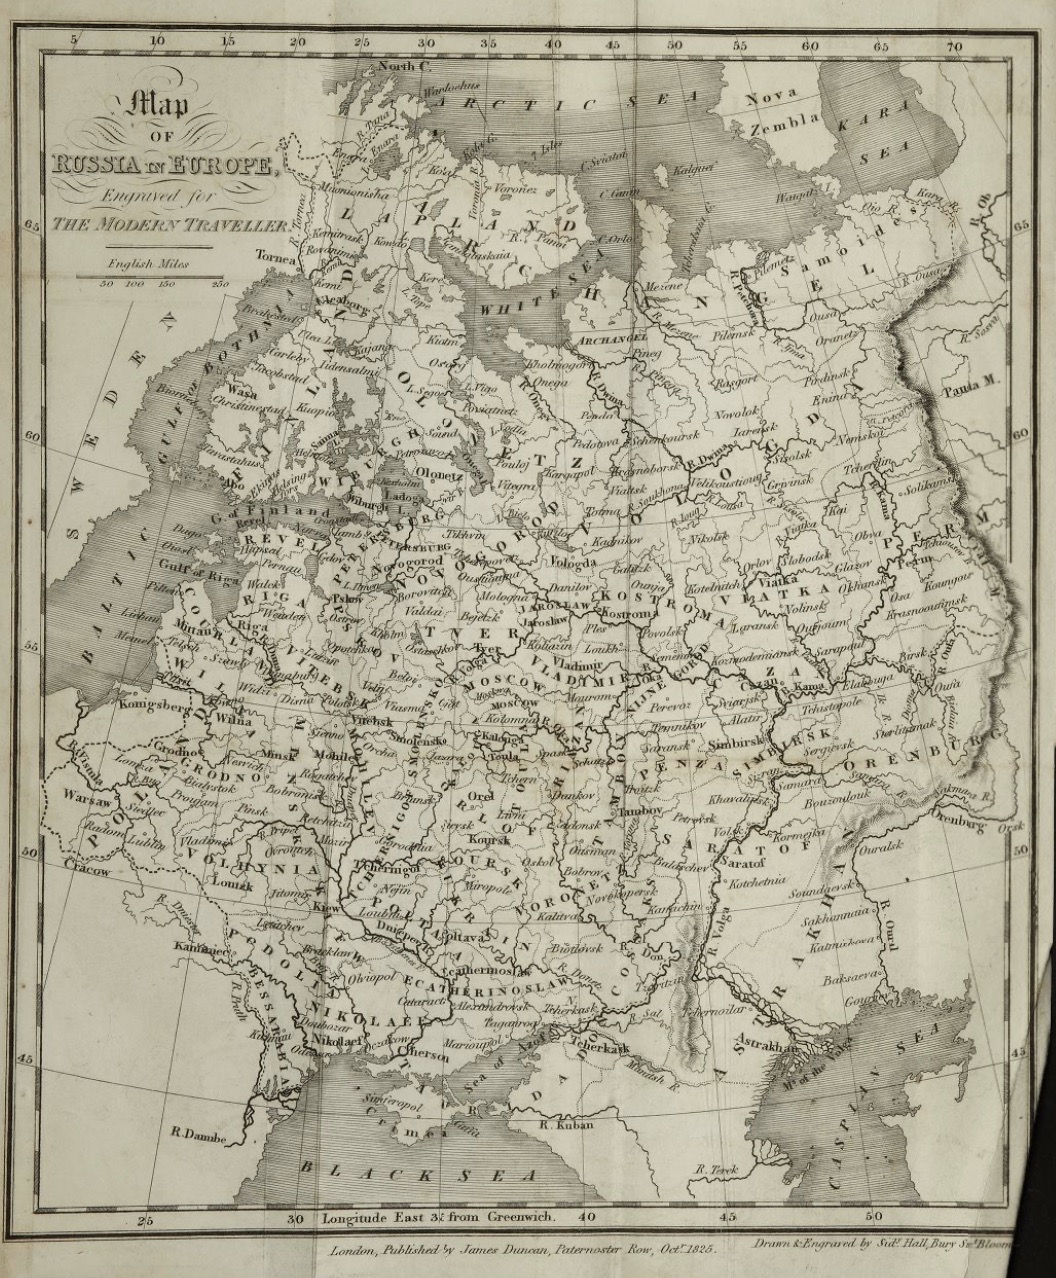 Conder: Traveler 1830, "Russia in Europe"